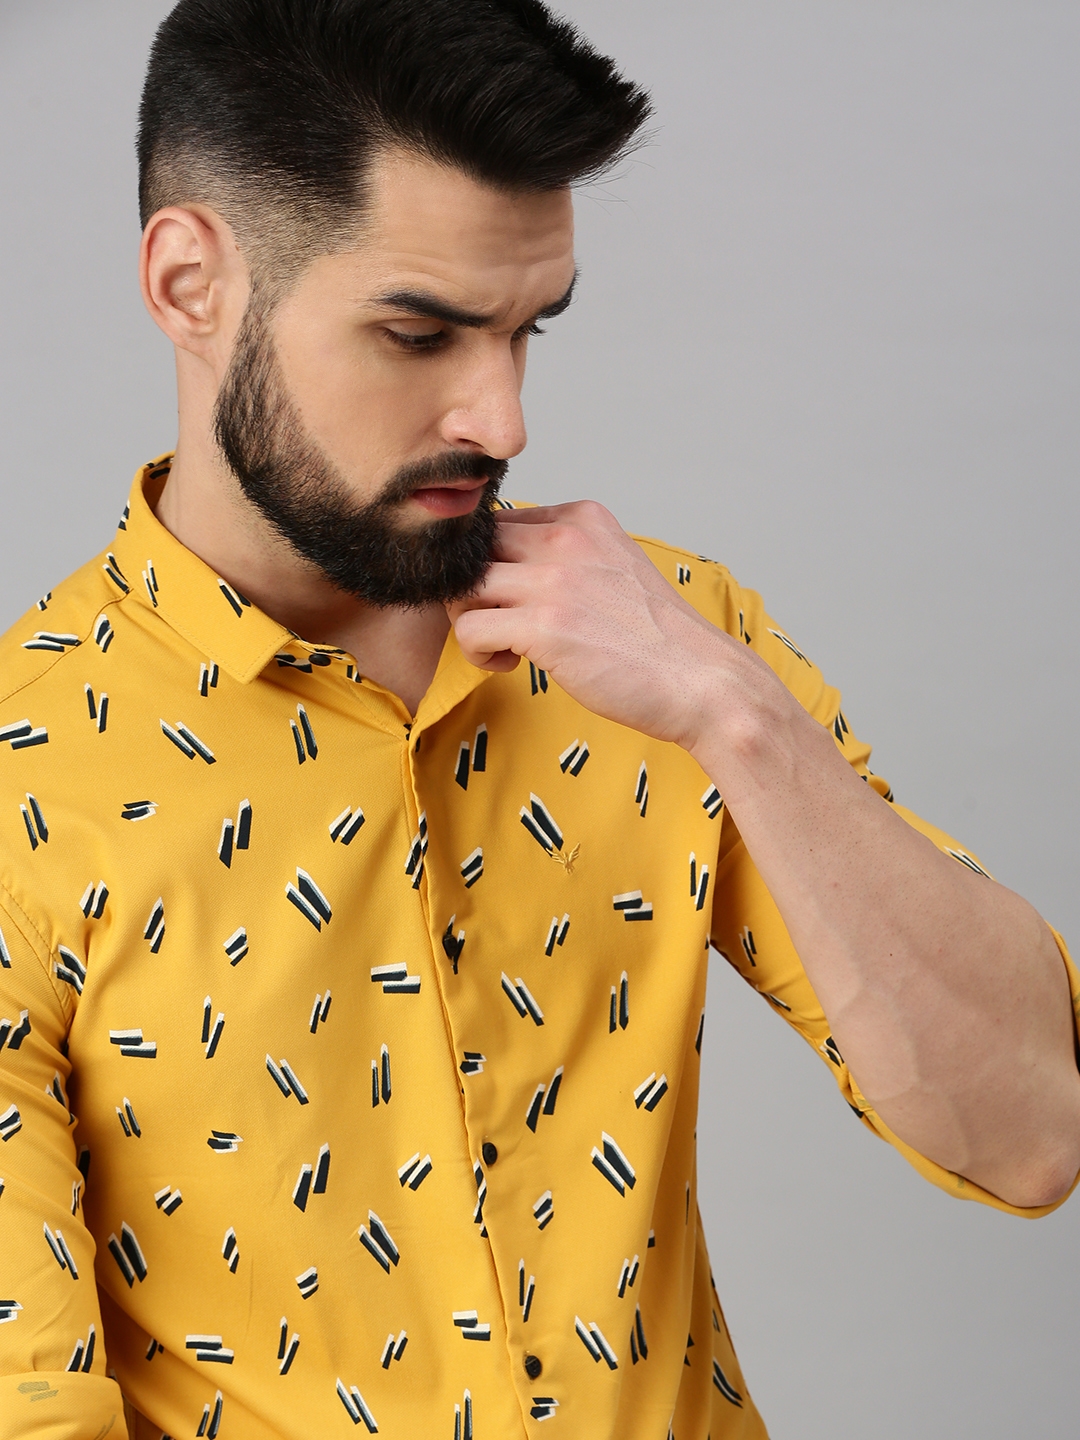 Men's Yellow Cotton Printed Casual Shirts